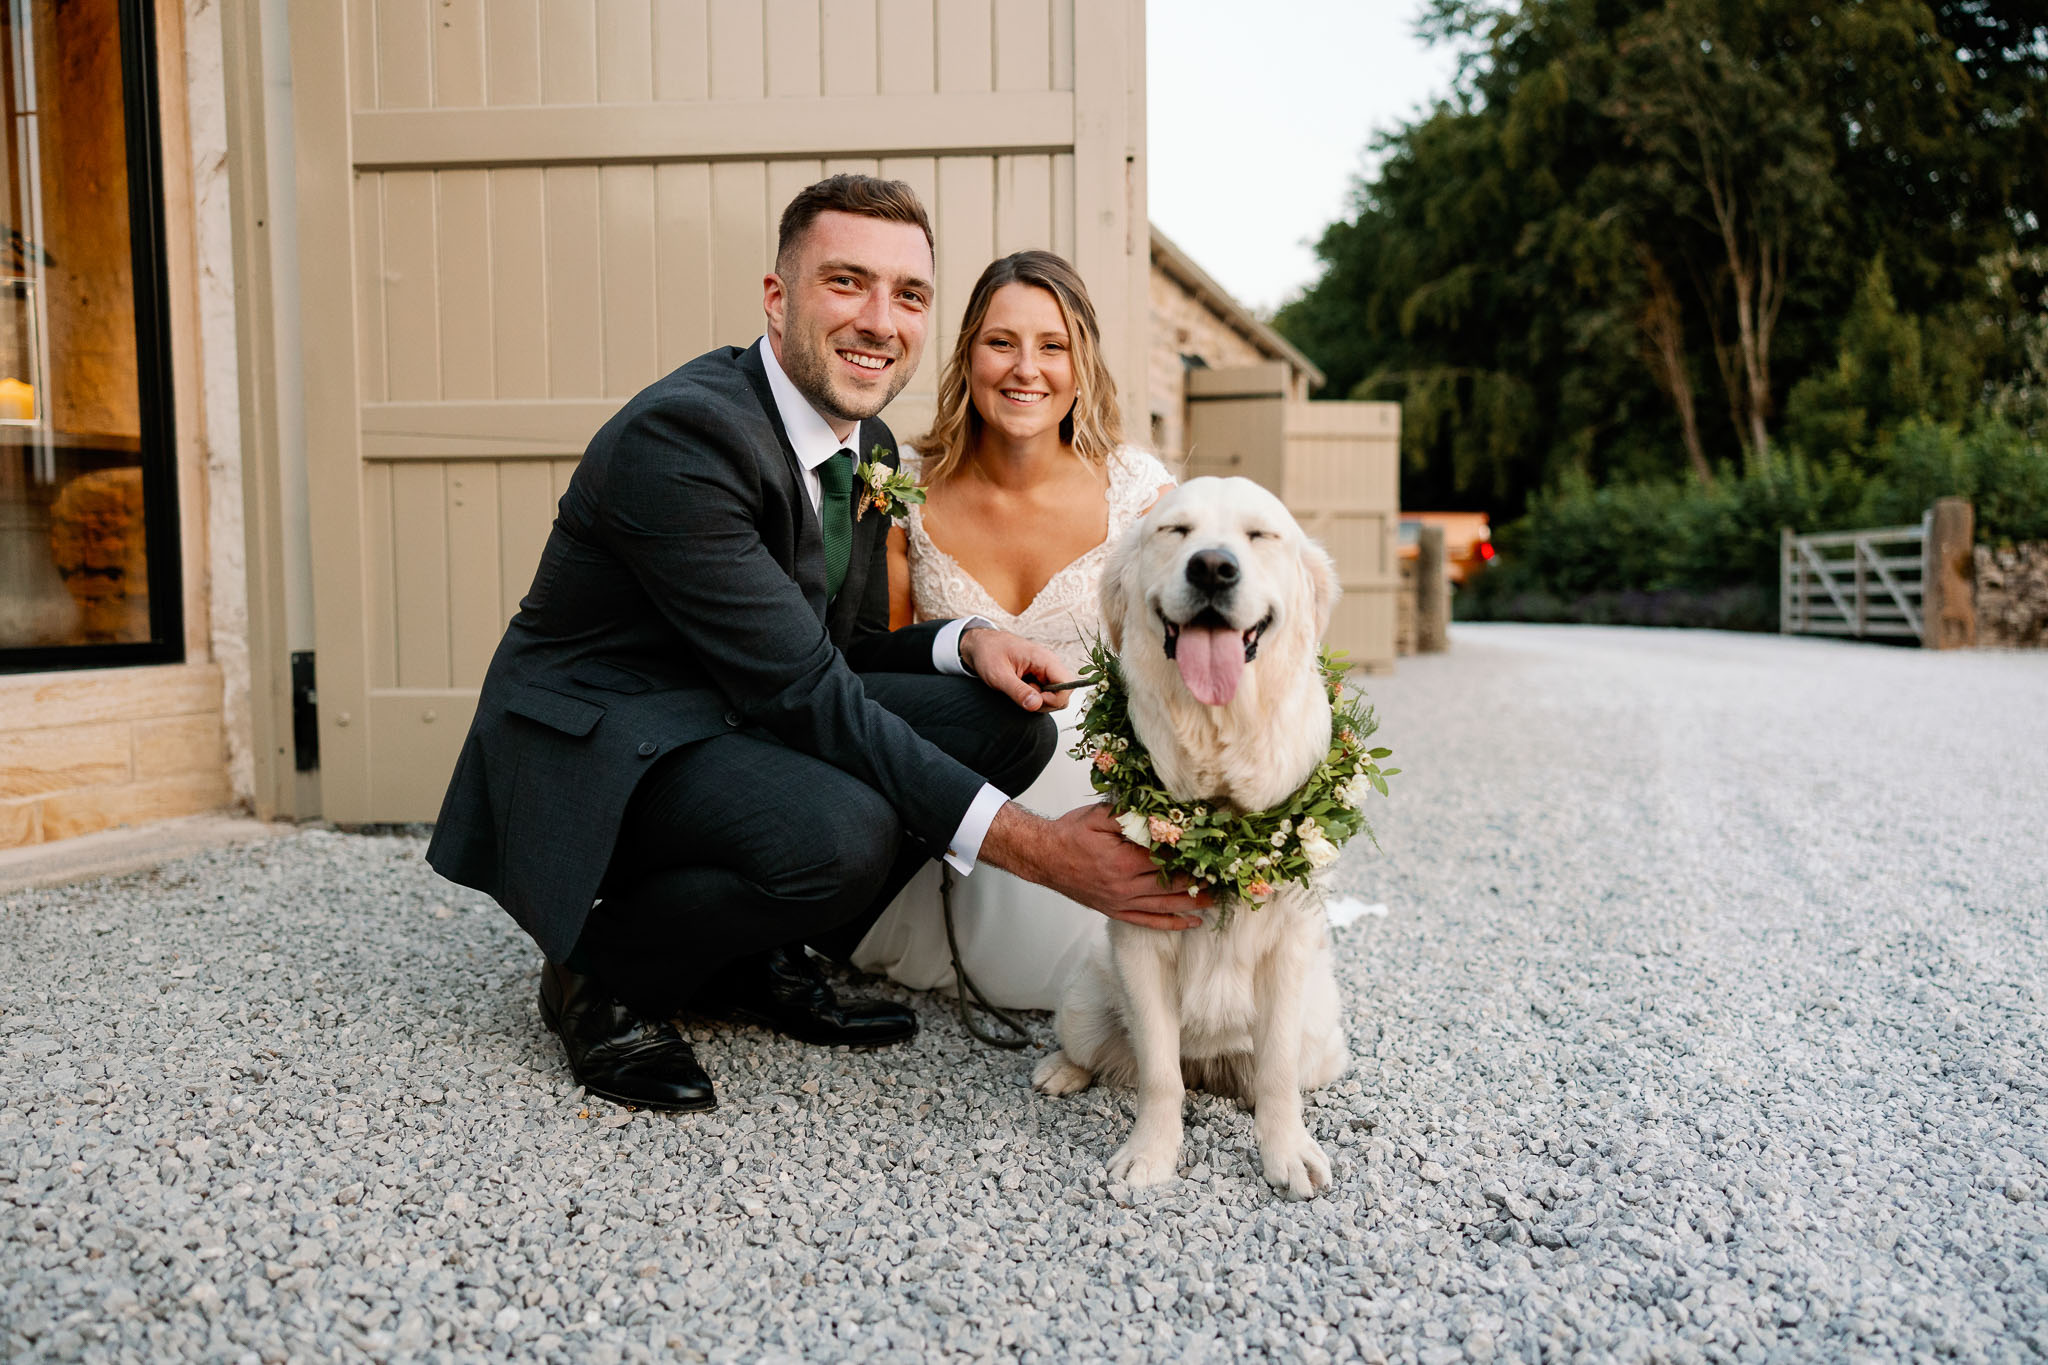 A dog at a wedding wearing a flower garland crown